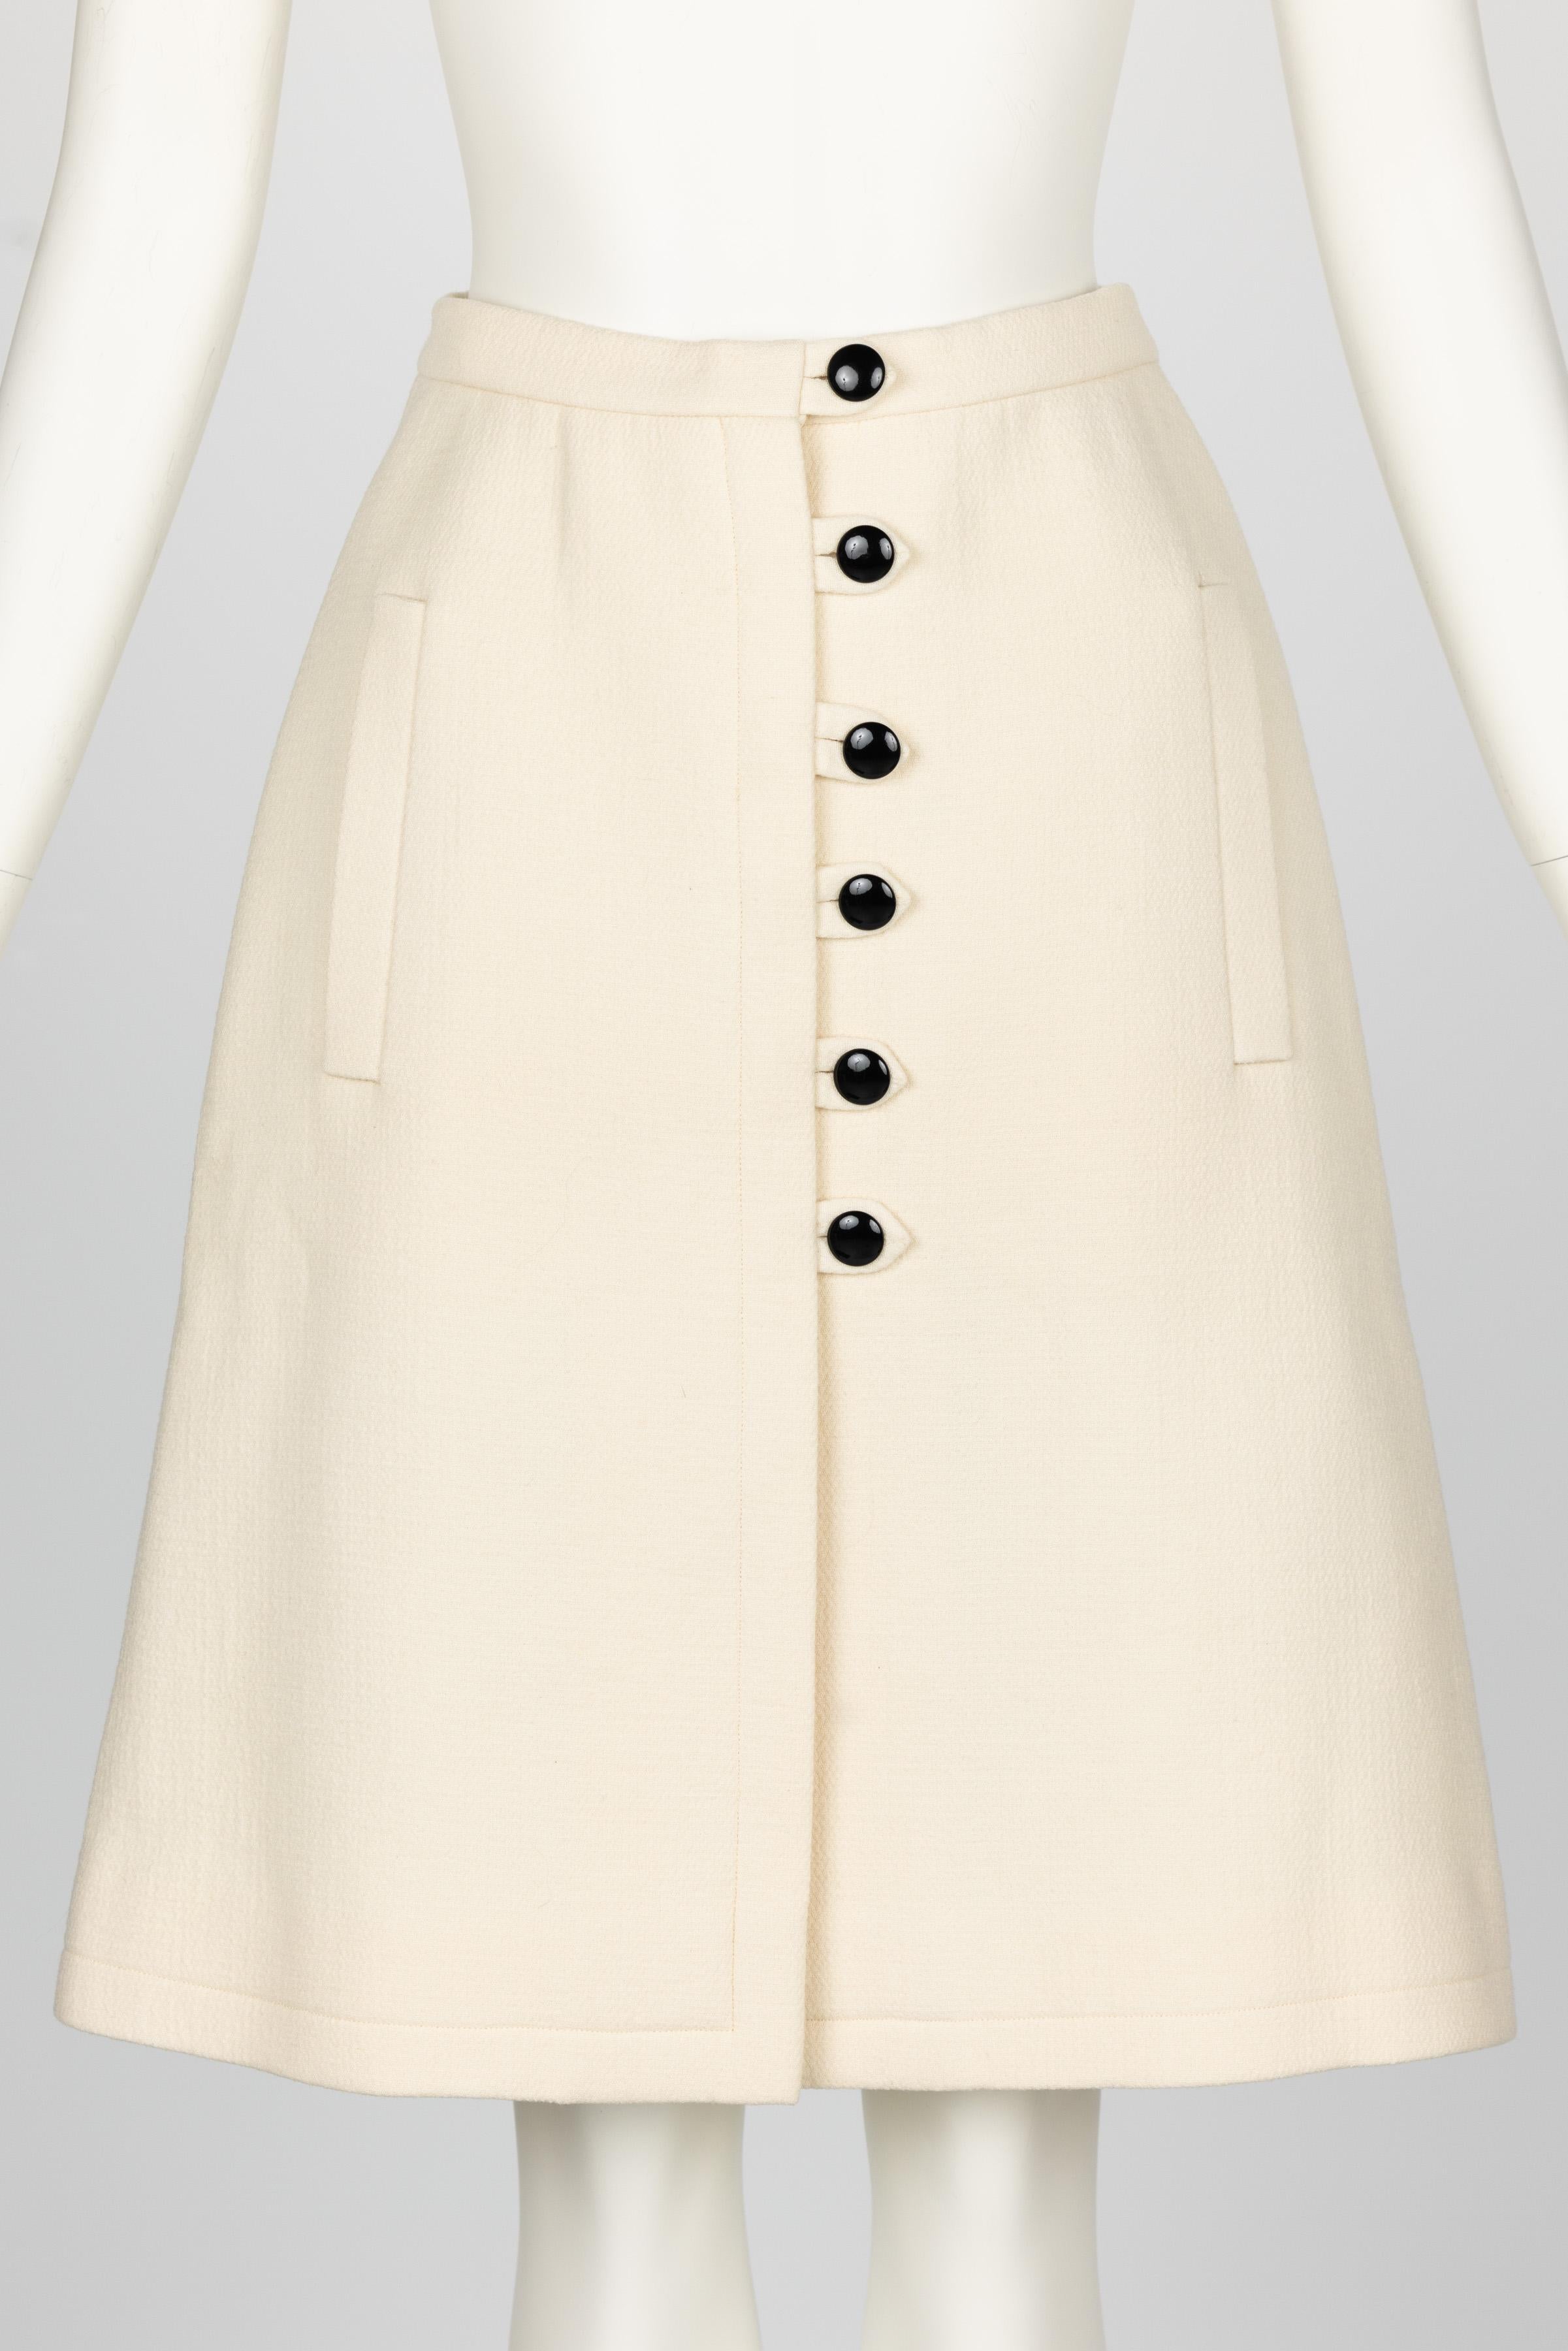 1960s Pauline Trigere Ivory & Black Tailored Vest Skirt Suit For Sale 8